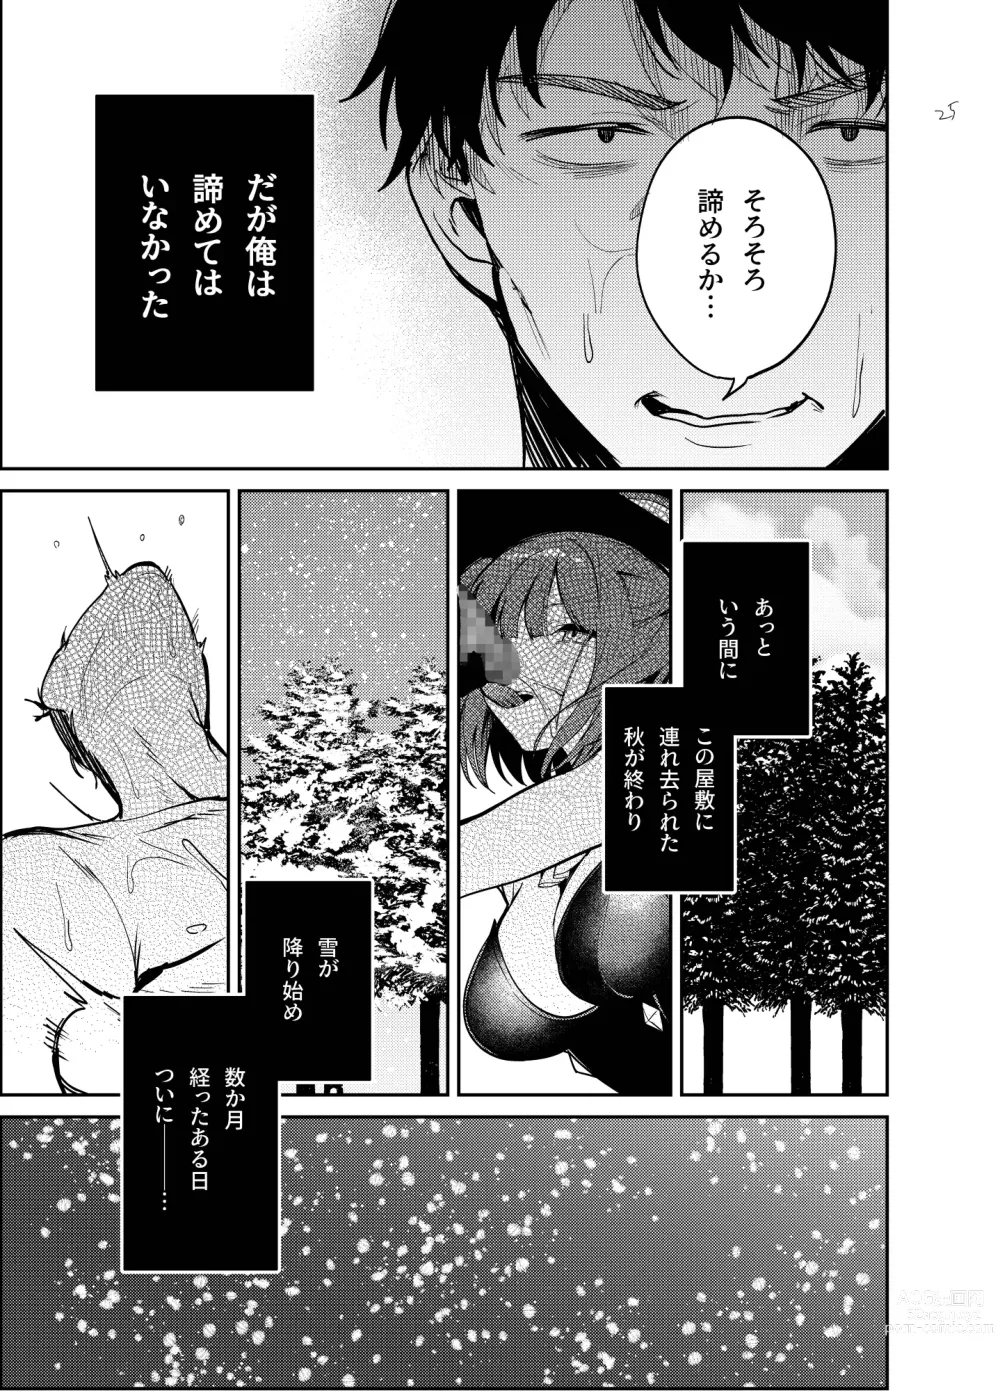 Page 25 of doujinshi Nightmare Before Christmas